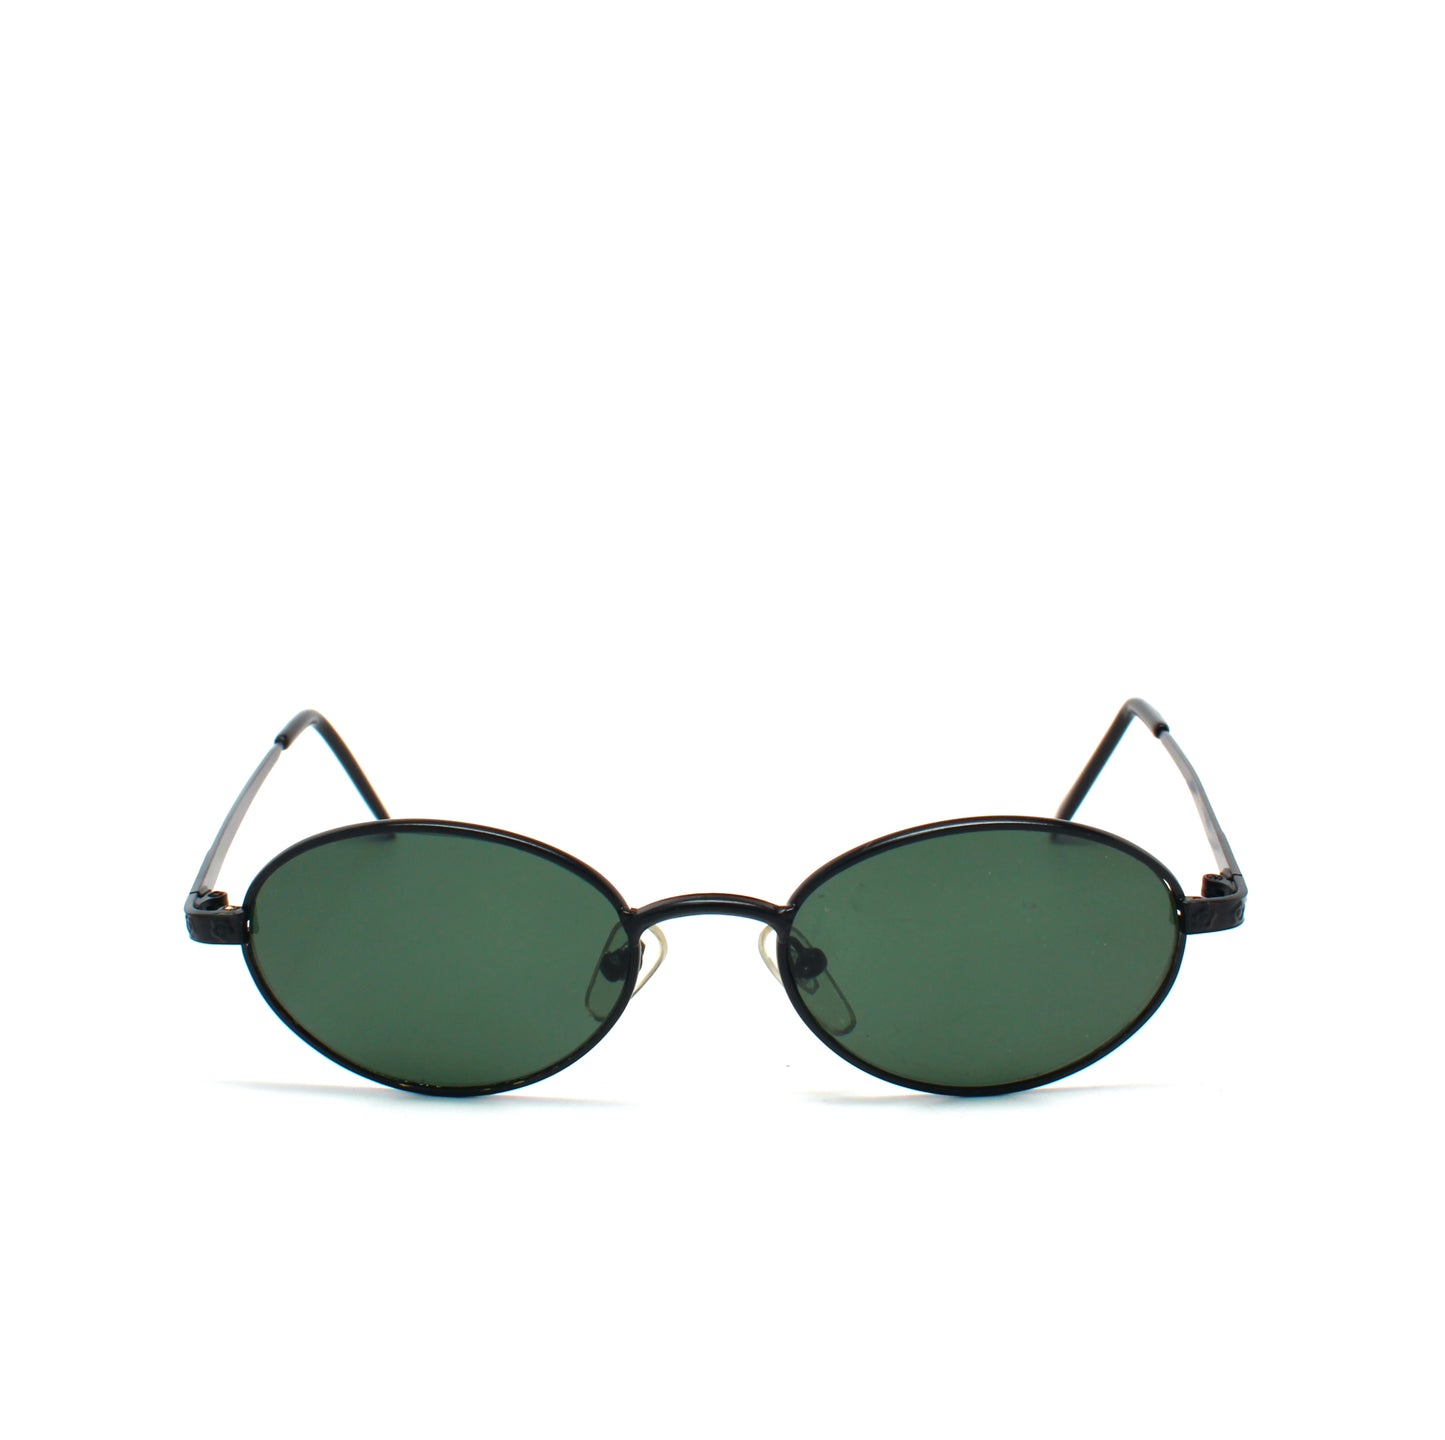 Vintage MINI Small Size 1996 Neo Standard Oval Frame Sunglasses - Black